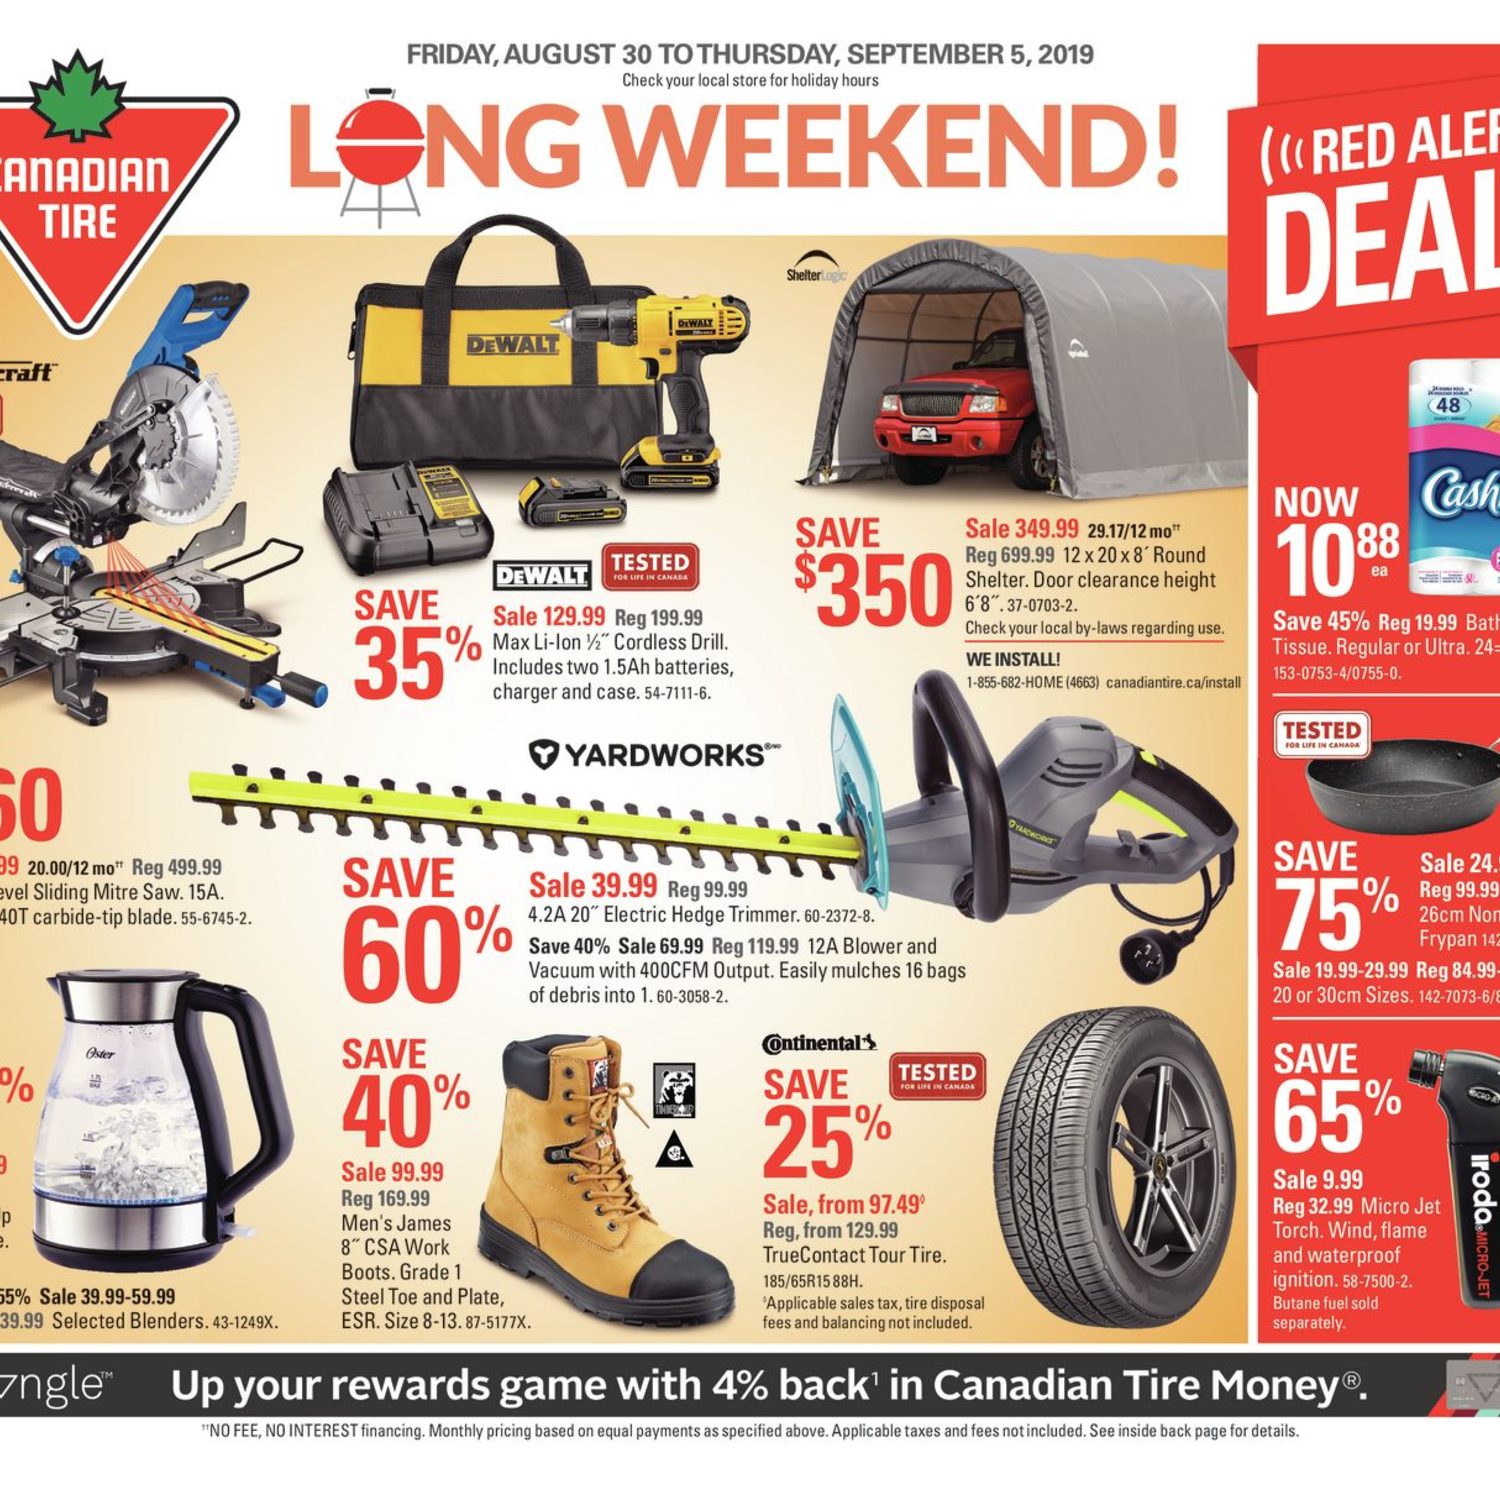 Canadian Tire Weekly Flyer Weekly Long Weekend Aug 30 Sep